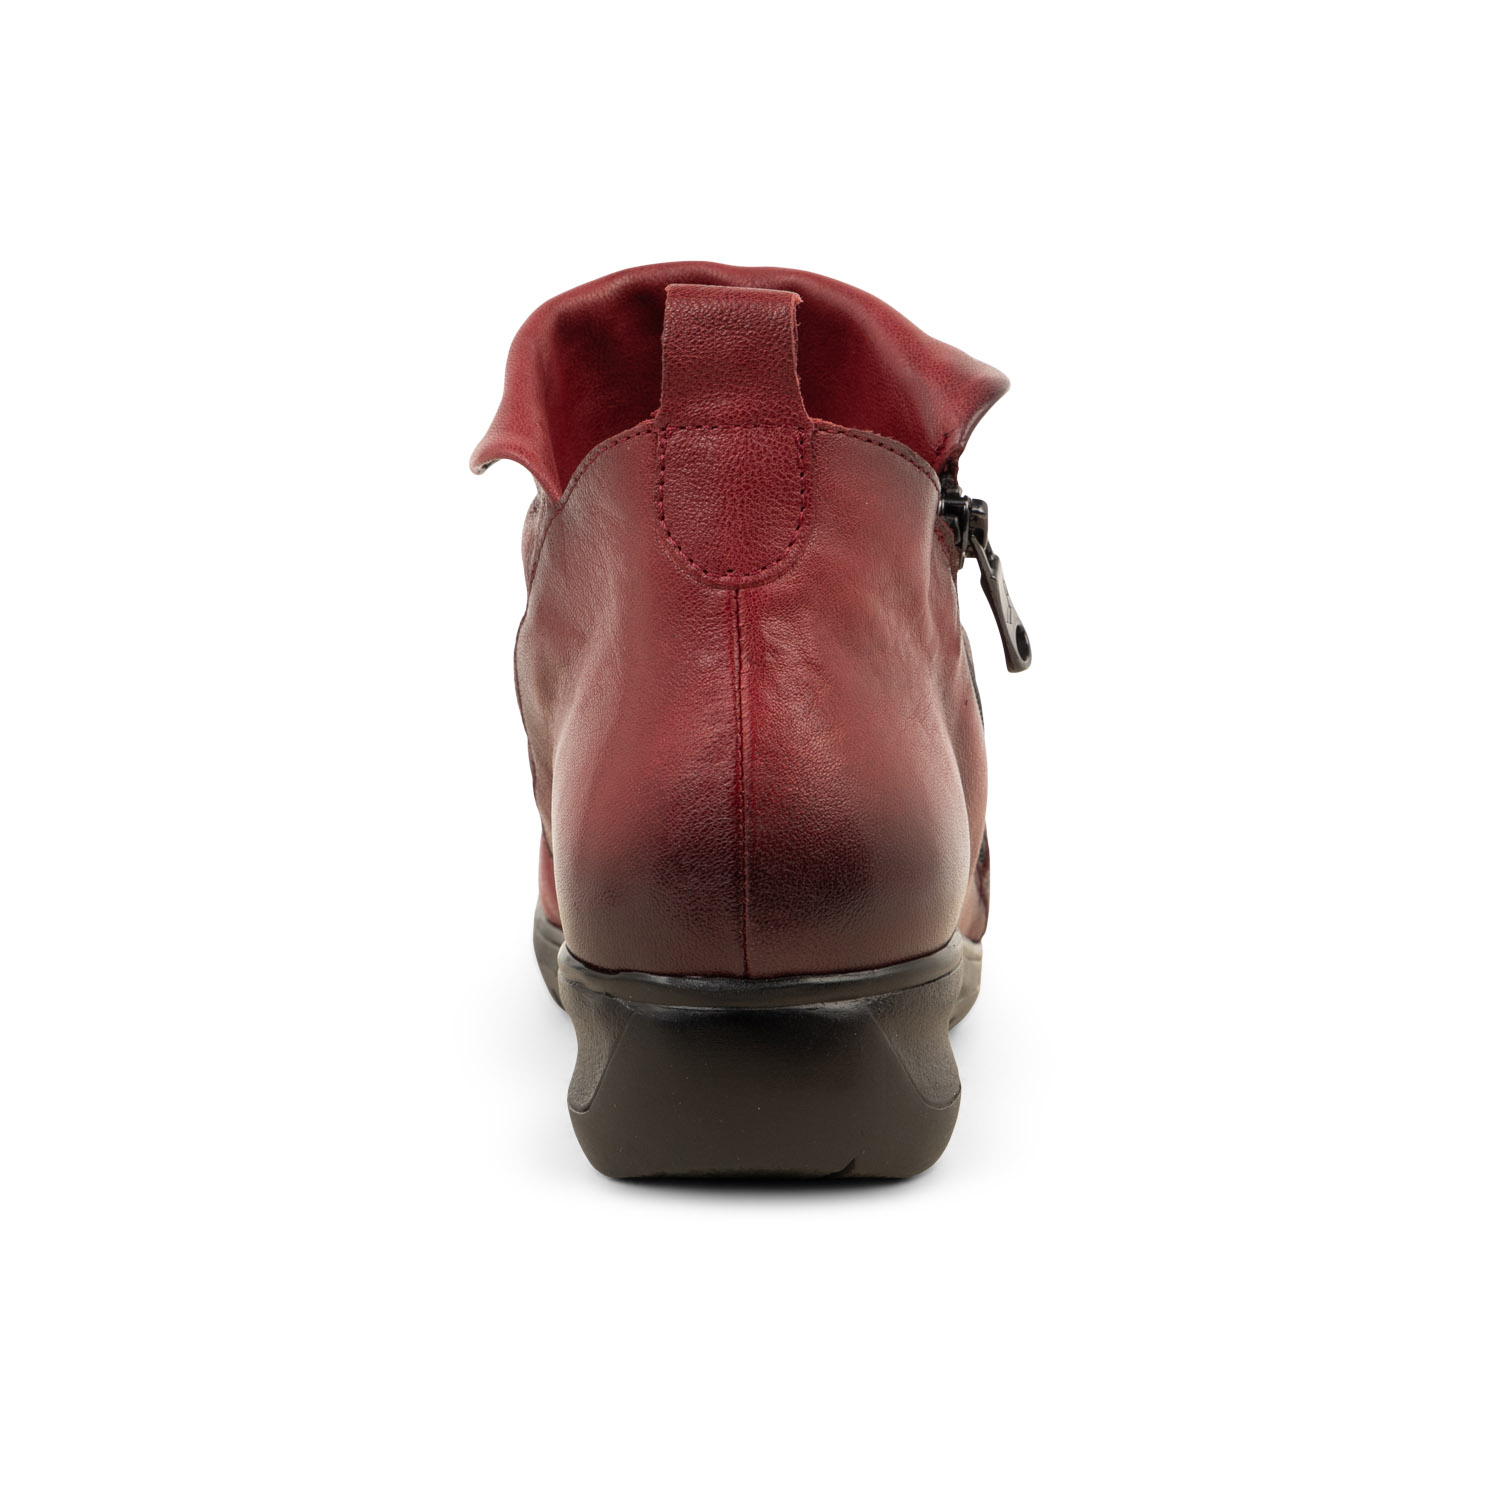 03 - PAUME - PAULA URBAN - Boots et bottines - Cuir